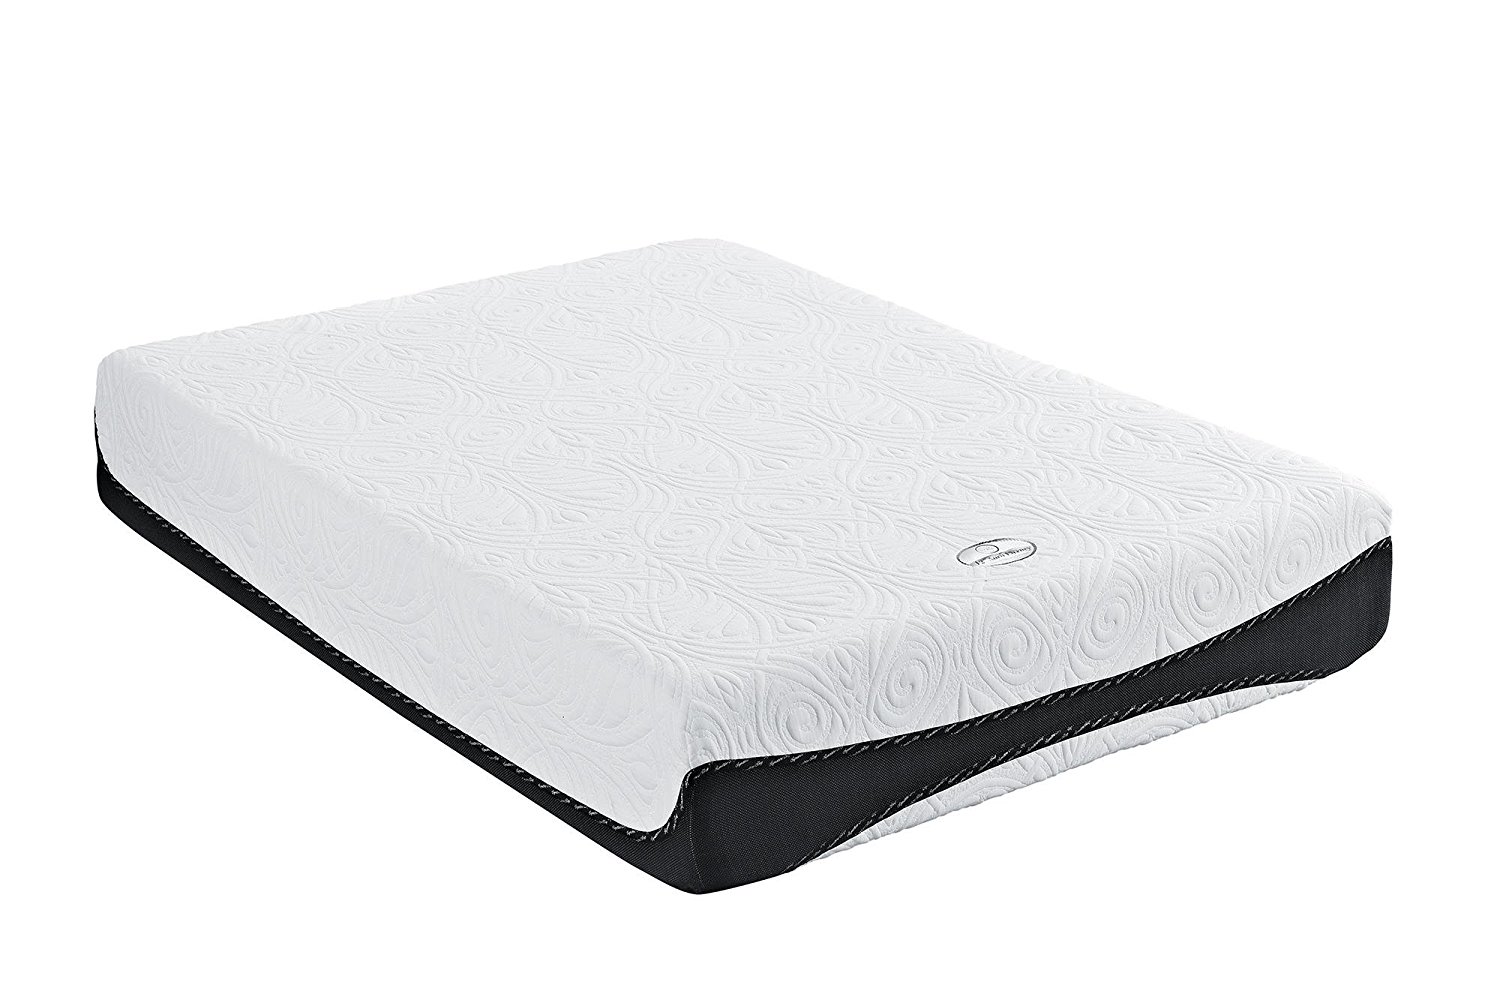 memory foam mattress for bassinet